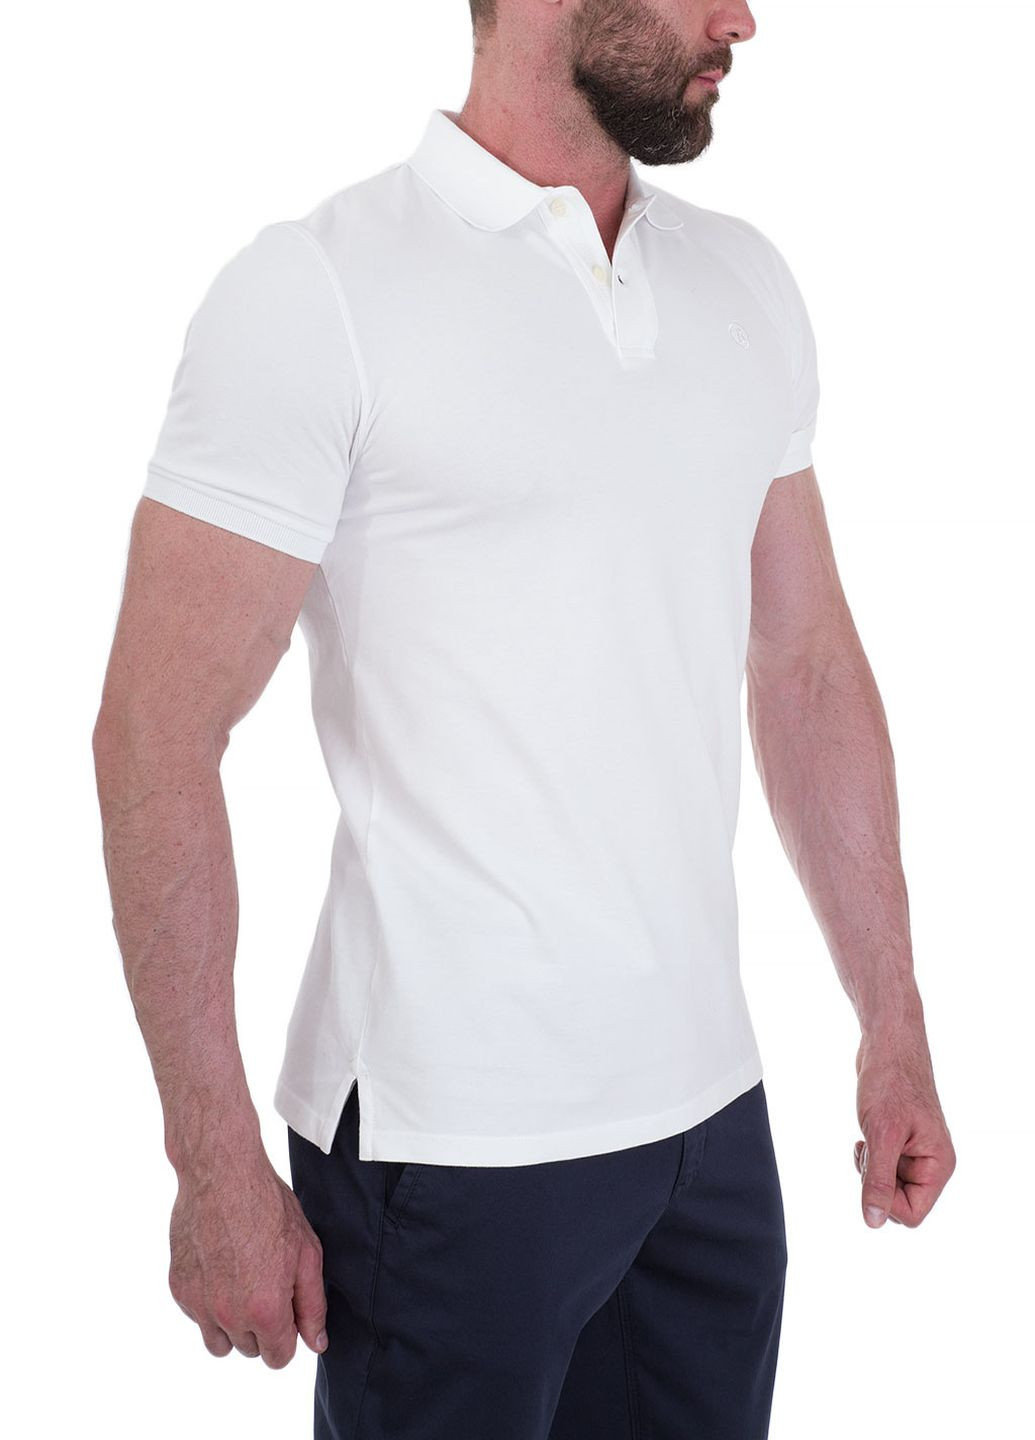 Белая футболка-поло чоловіче для мужчин Bogner однотонная